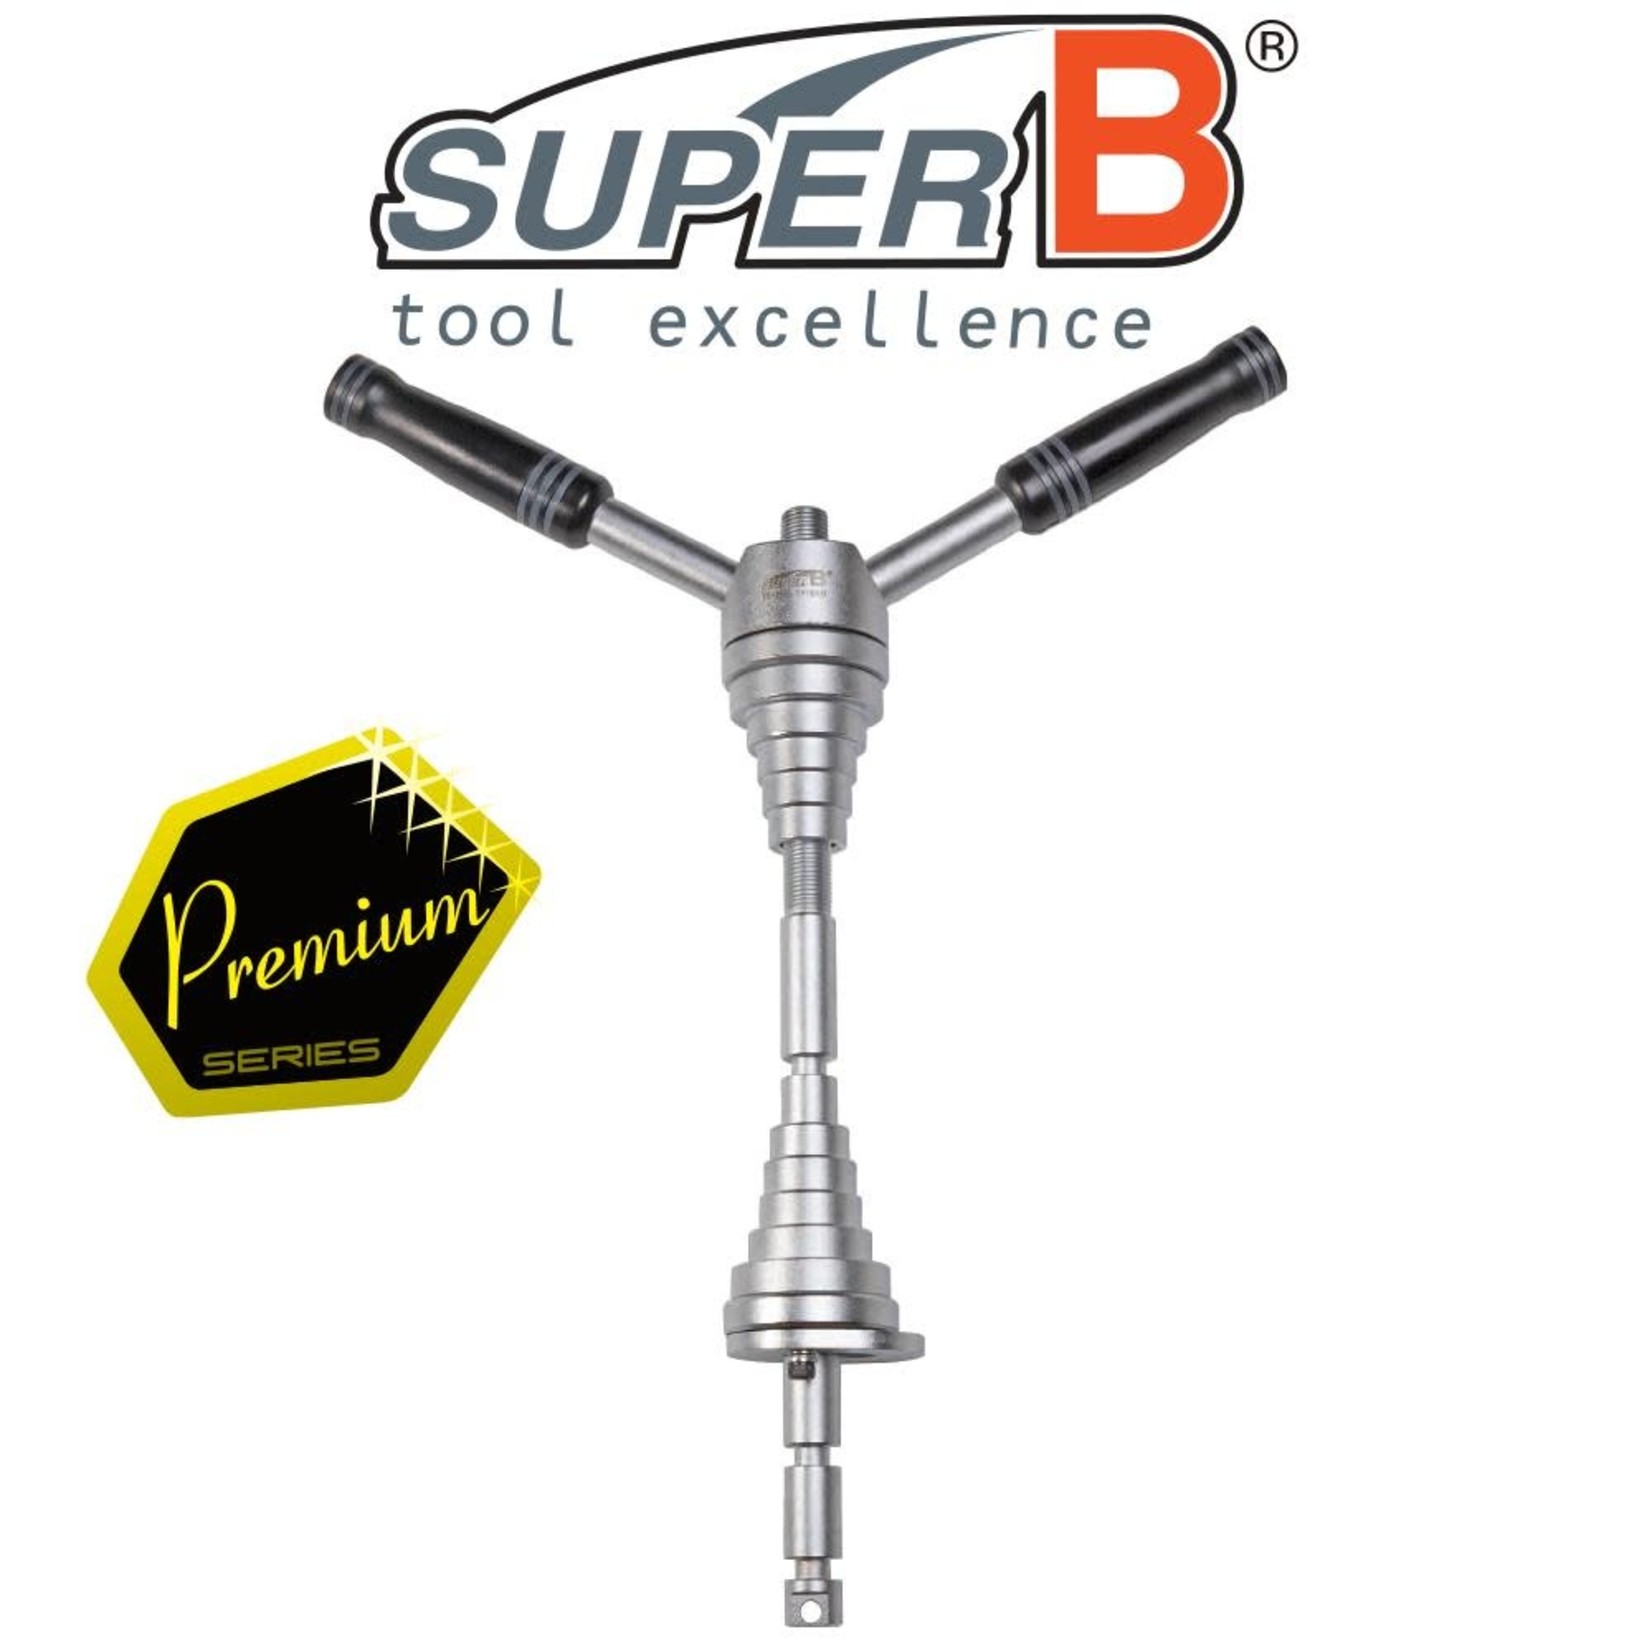 Super B SuperB Bike/Cycling Bearing Cup Press - Premium Series - Bike Tool